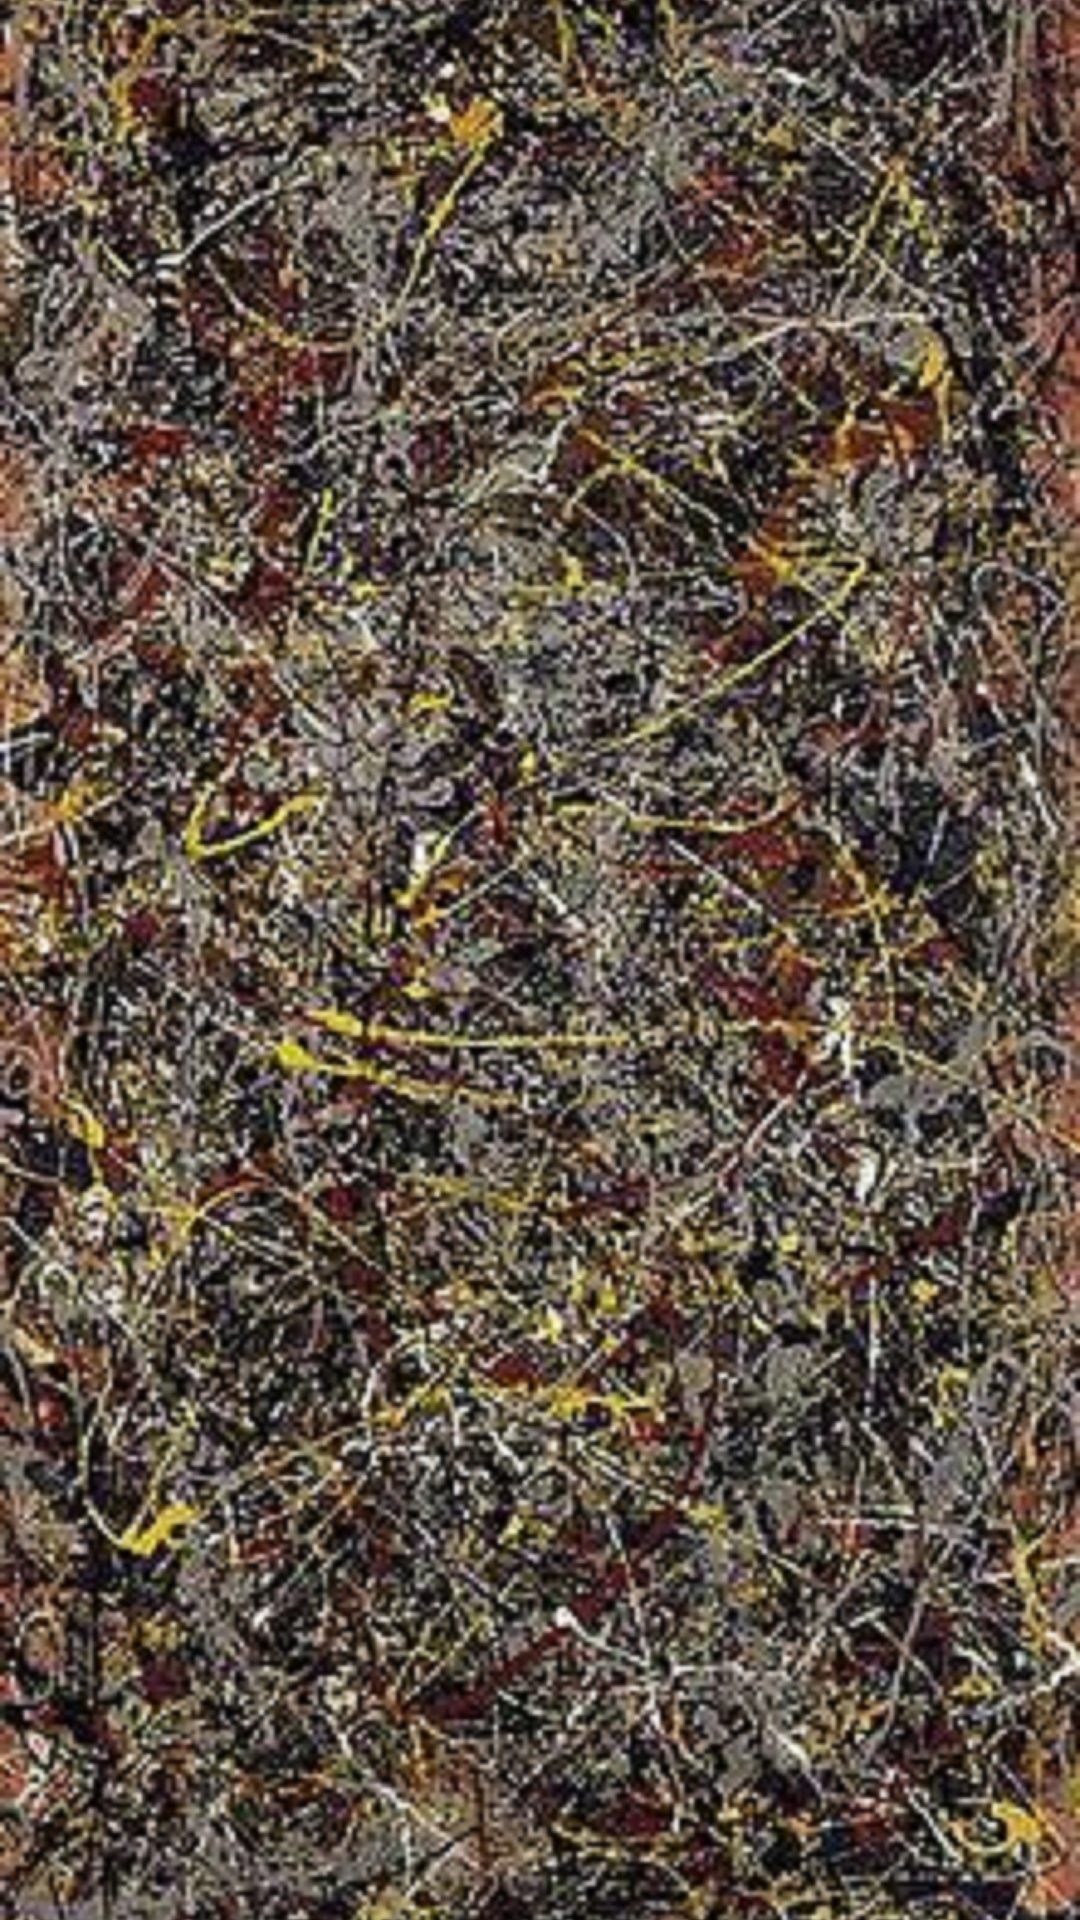 'No. 5' de Jackson Pollock 